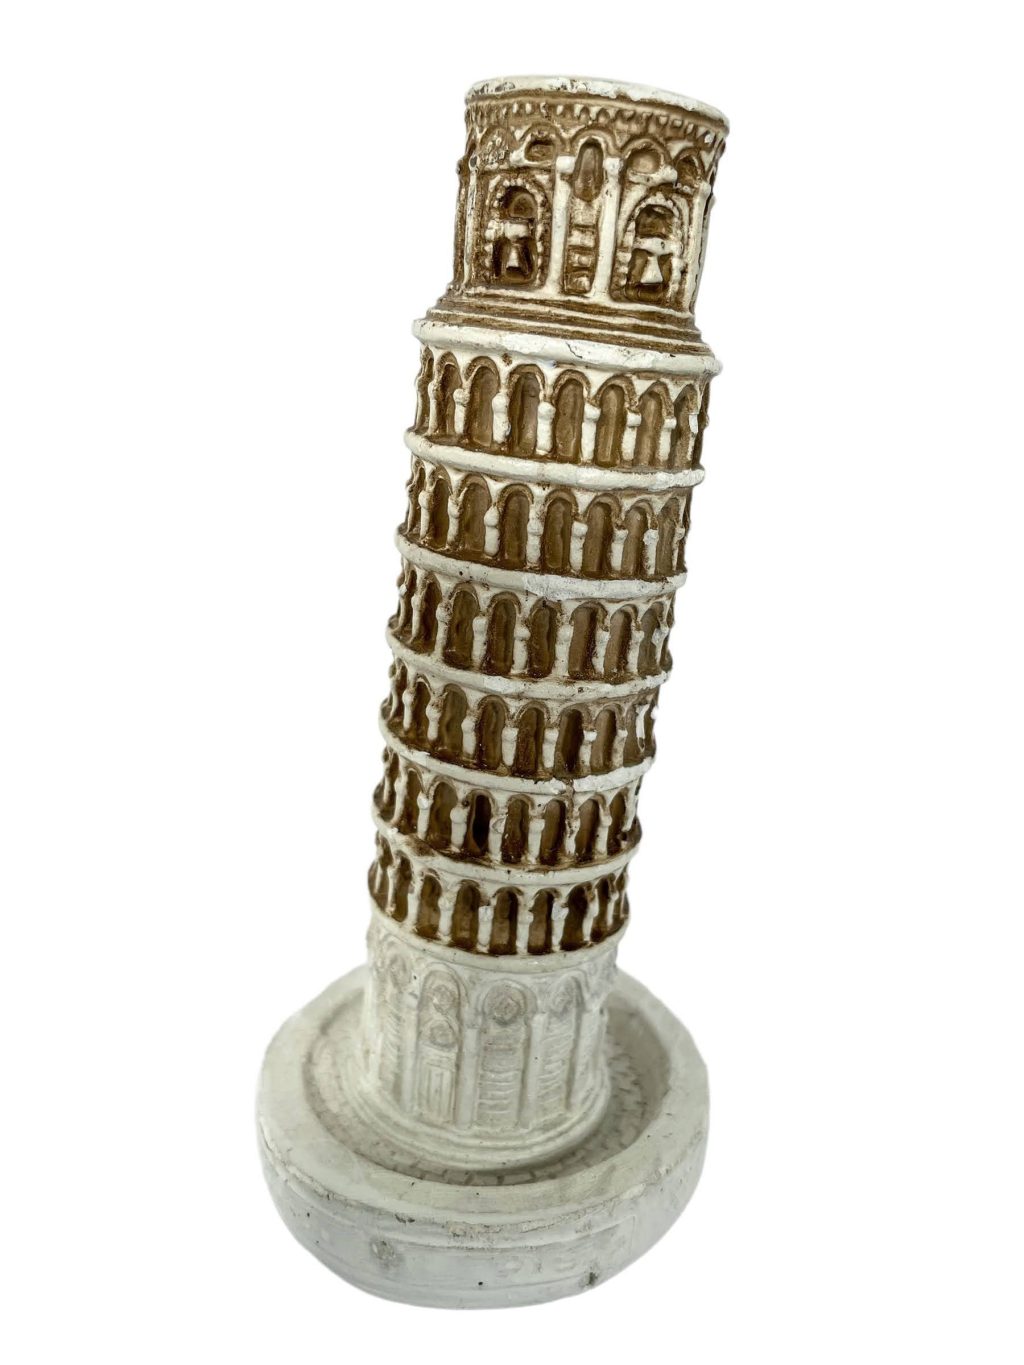 Vintage Italian Leaning Tower Of Pisa Souvenir Ornament Plaster Statue Figurine Ornament Gift Display circa 1980’s